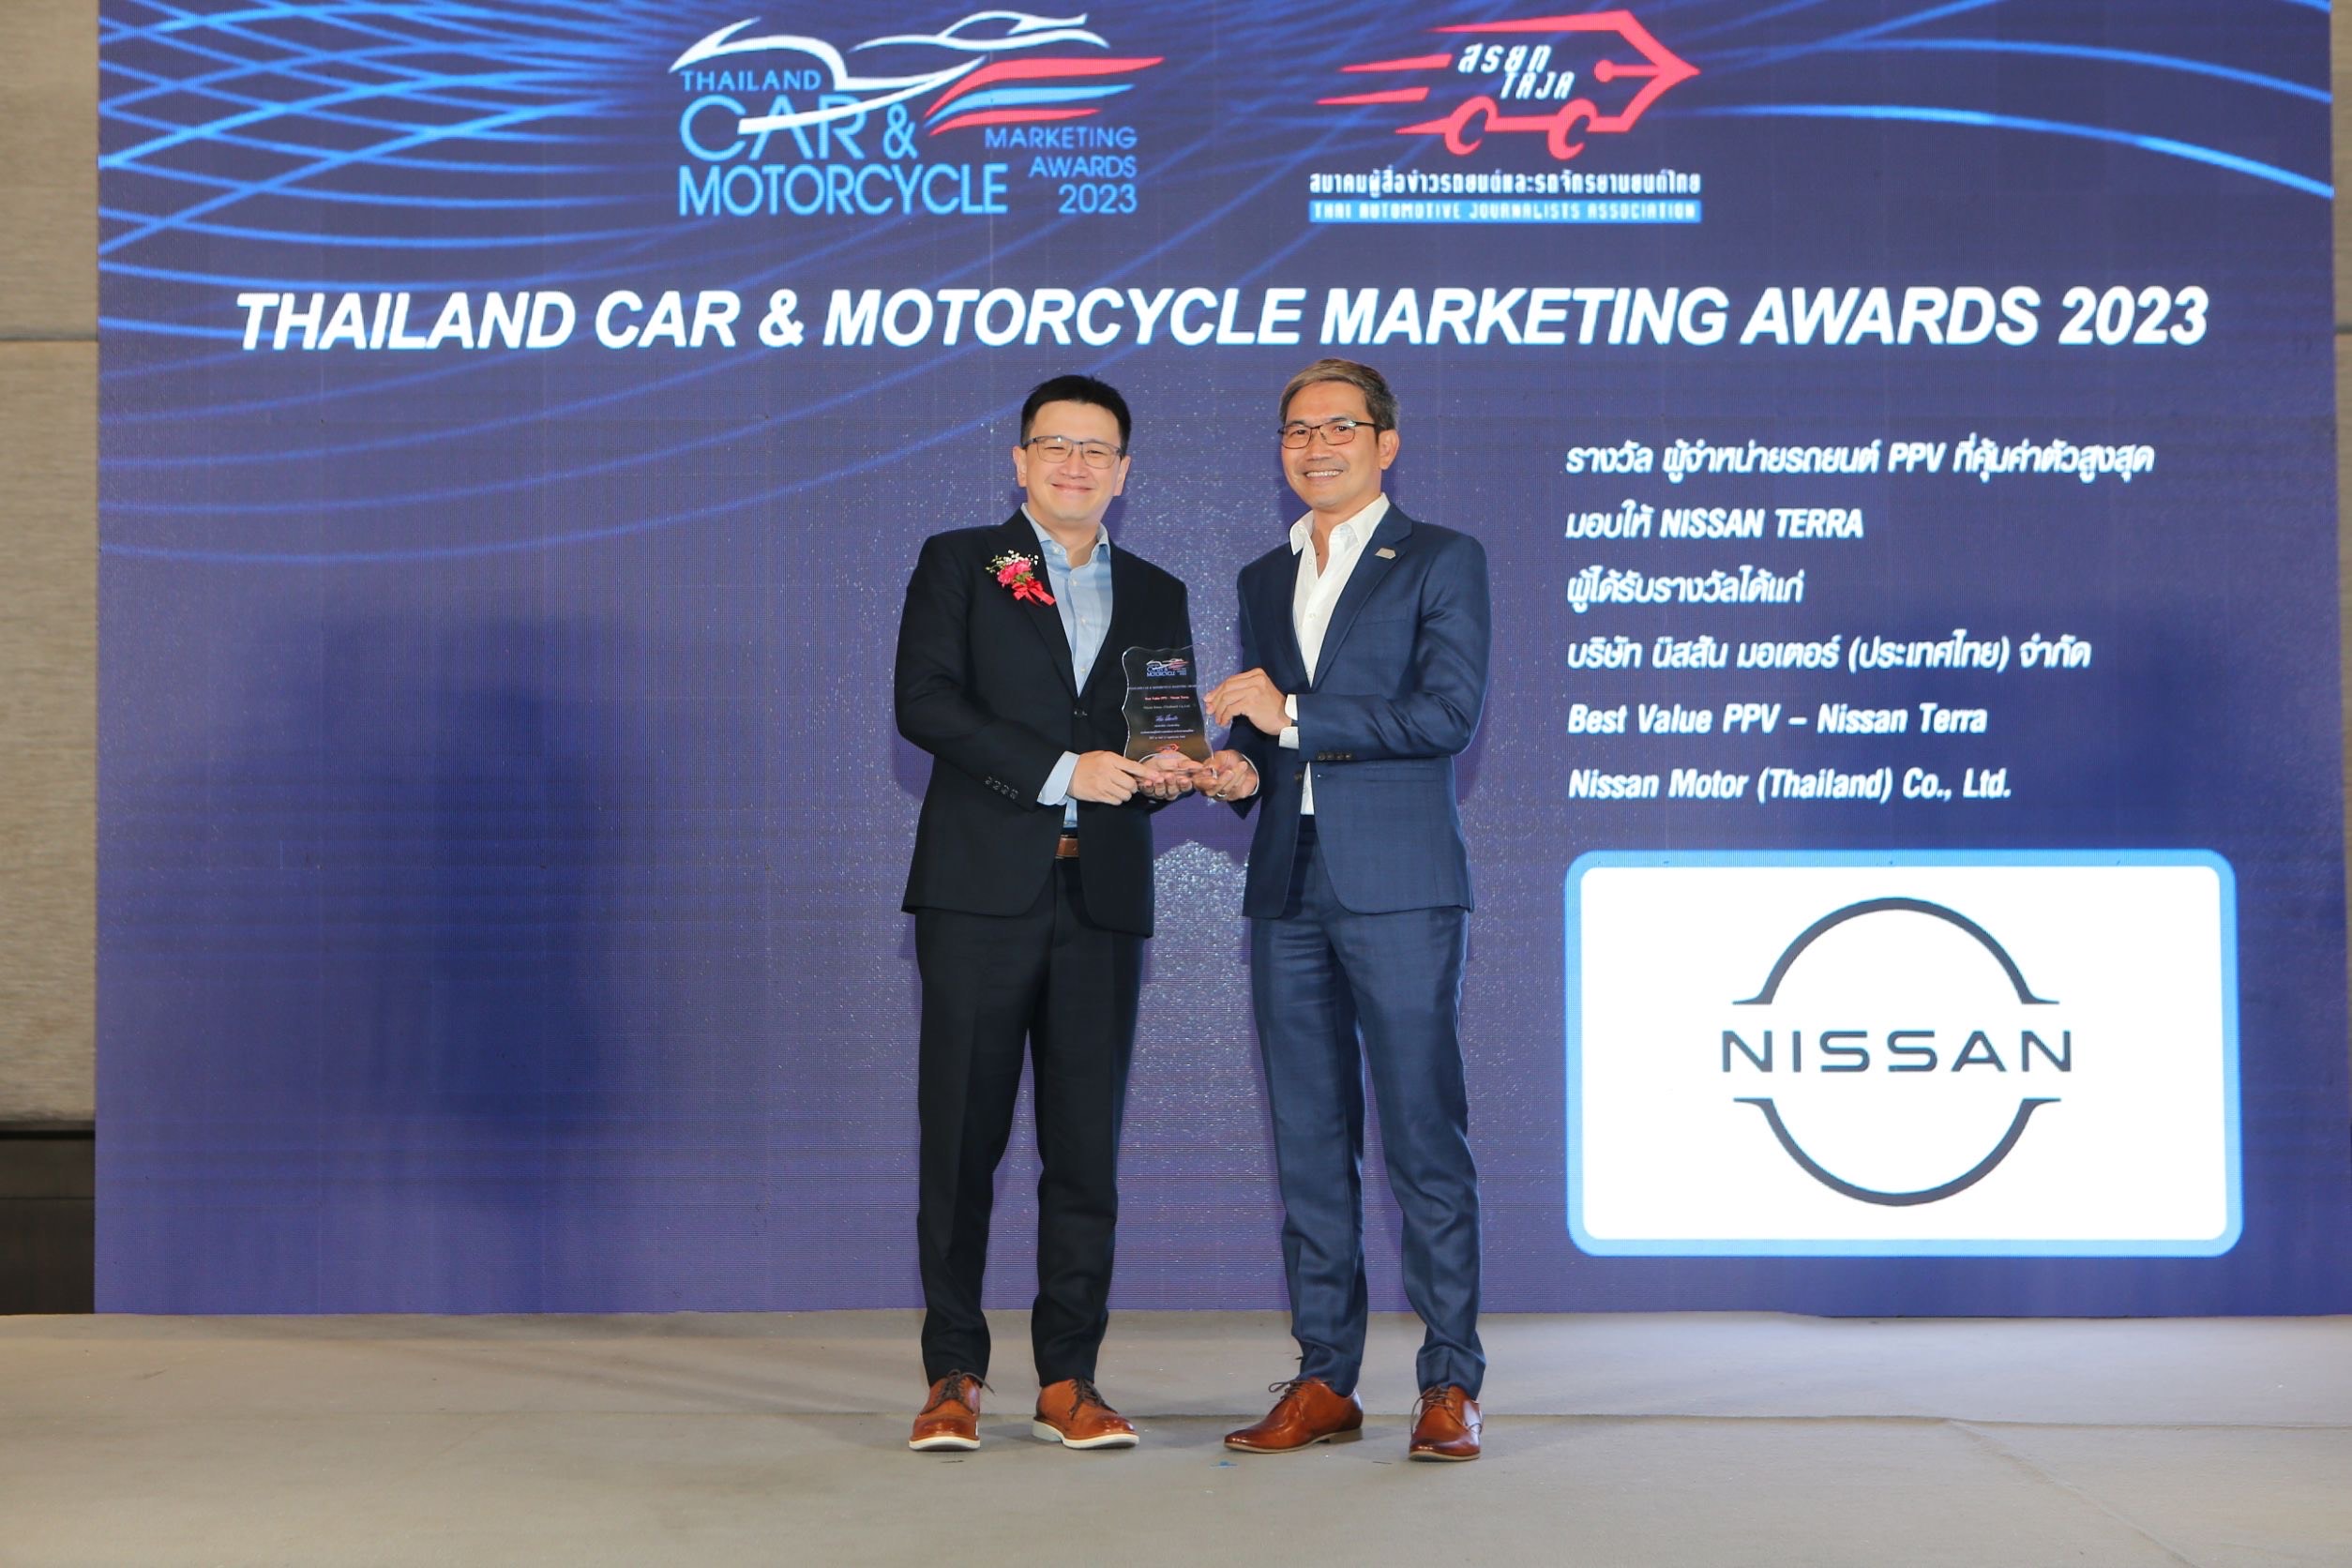 Nissan Terra wins Best Value PPV Award from TAJA